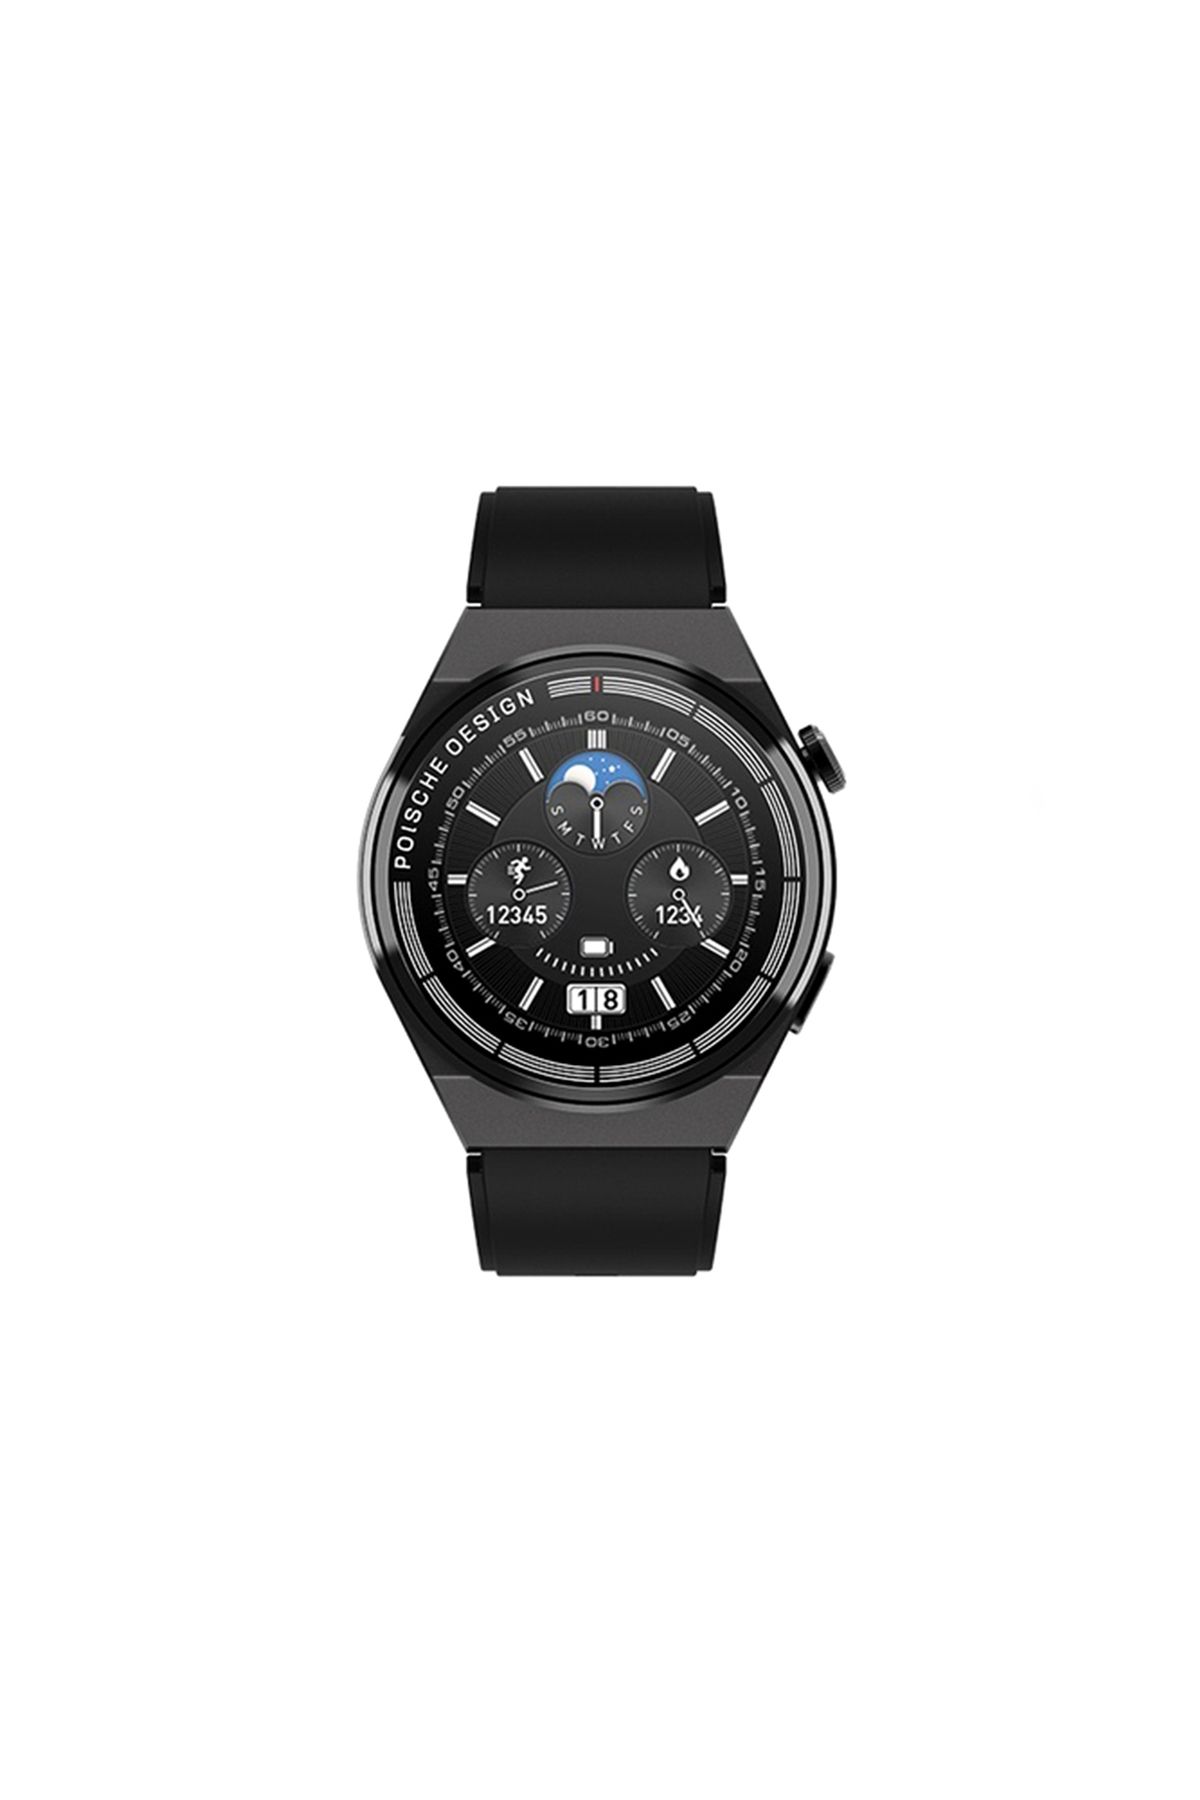 Winex Mobile Winex 2024 Watch Gt3 Max Android Ios Harmonyos Uyumlu Akıllı Saat Siyah